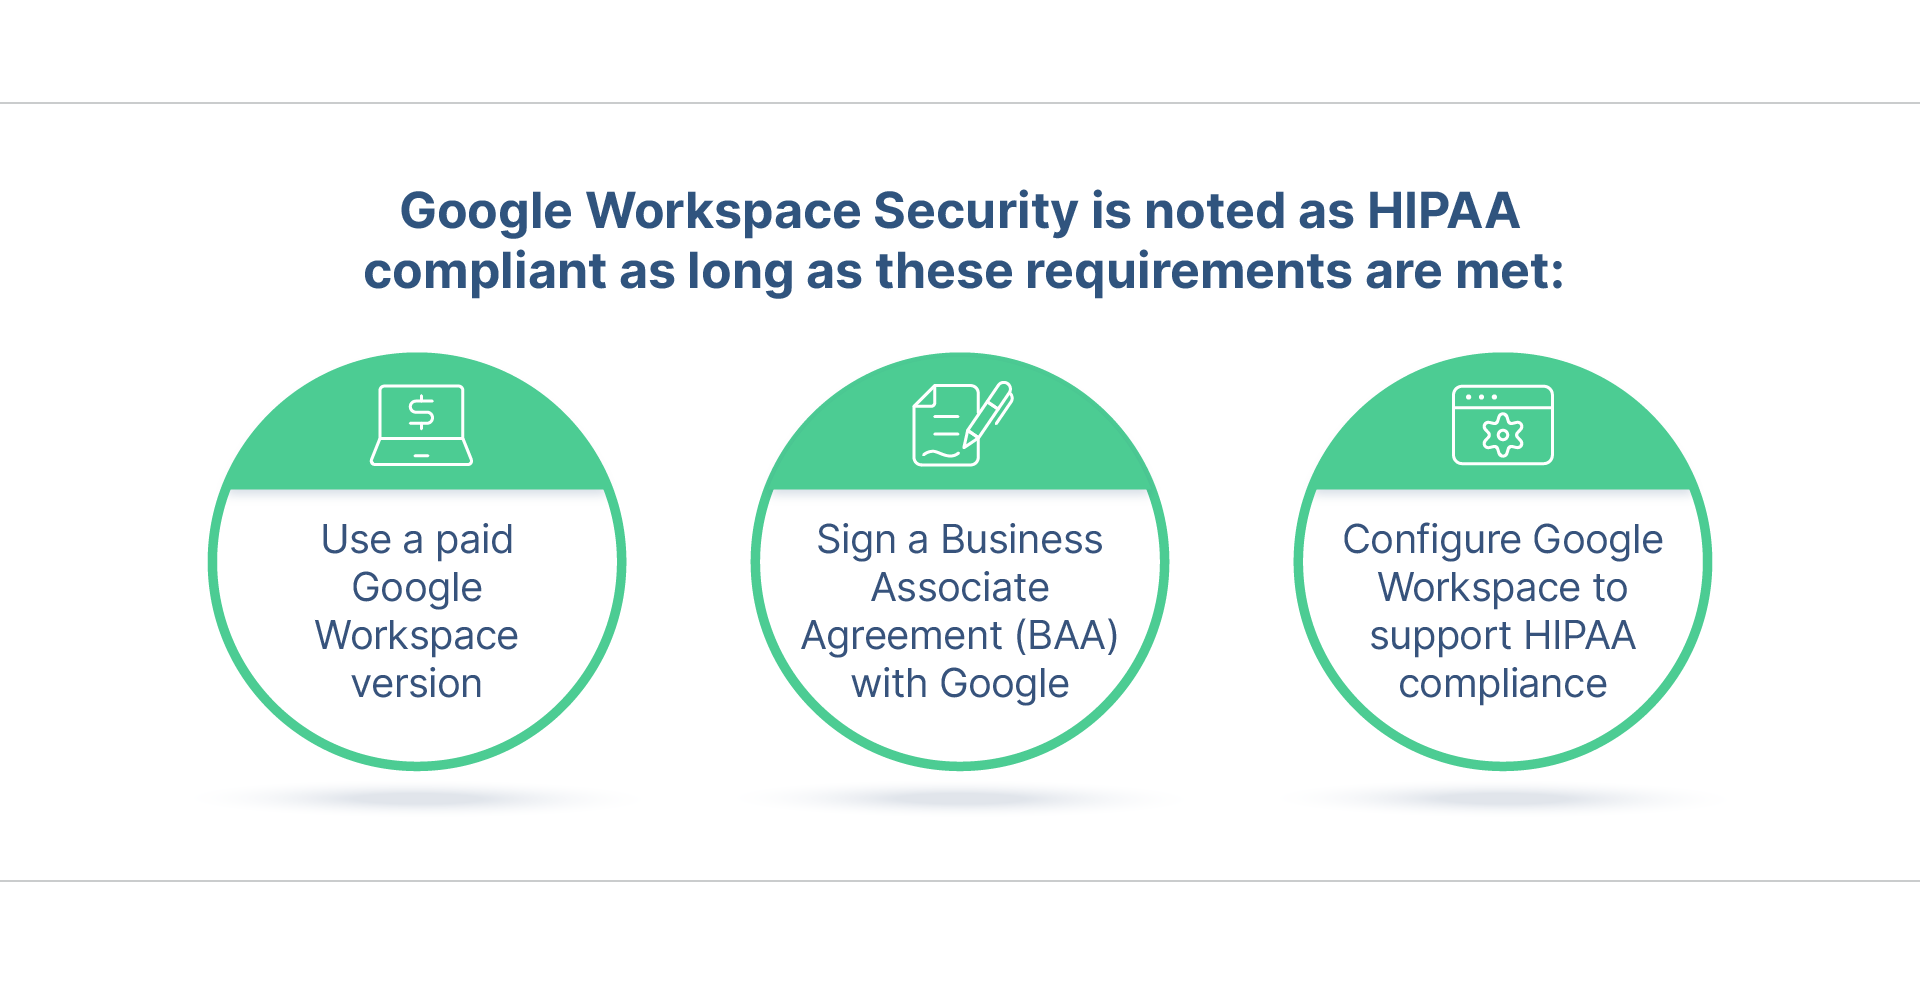 Is Google Workspace HIPAA compliant?